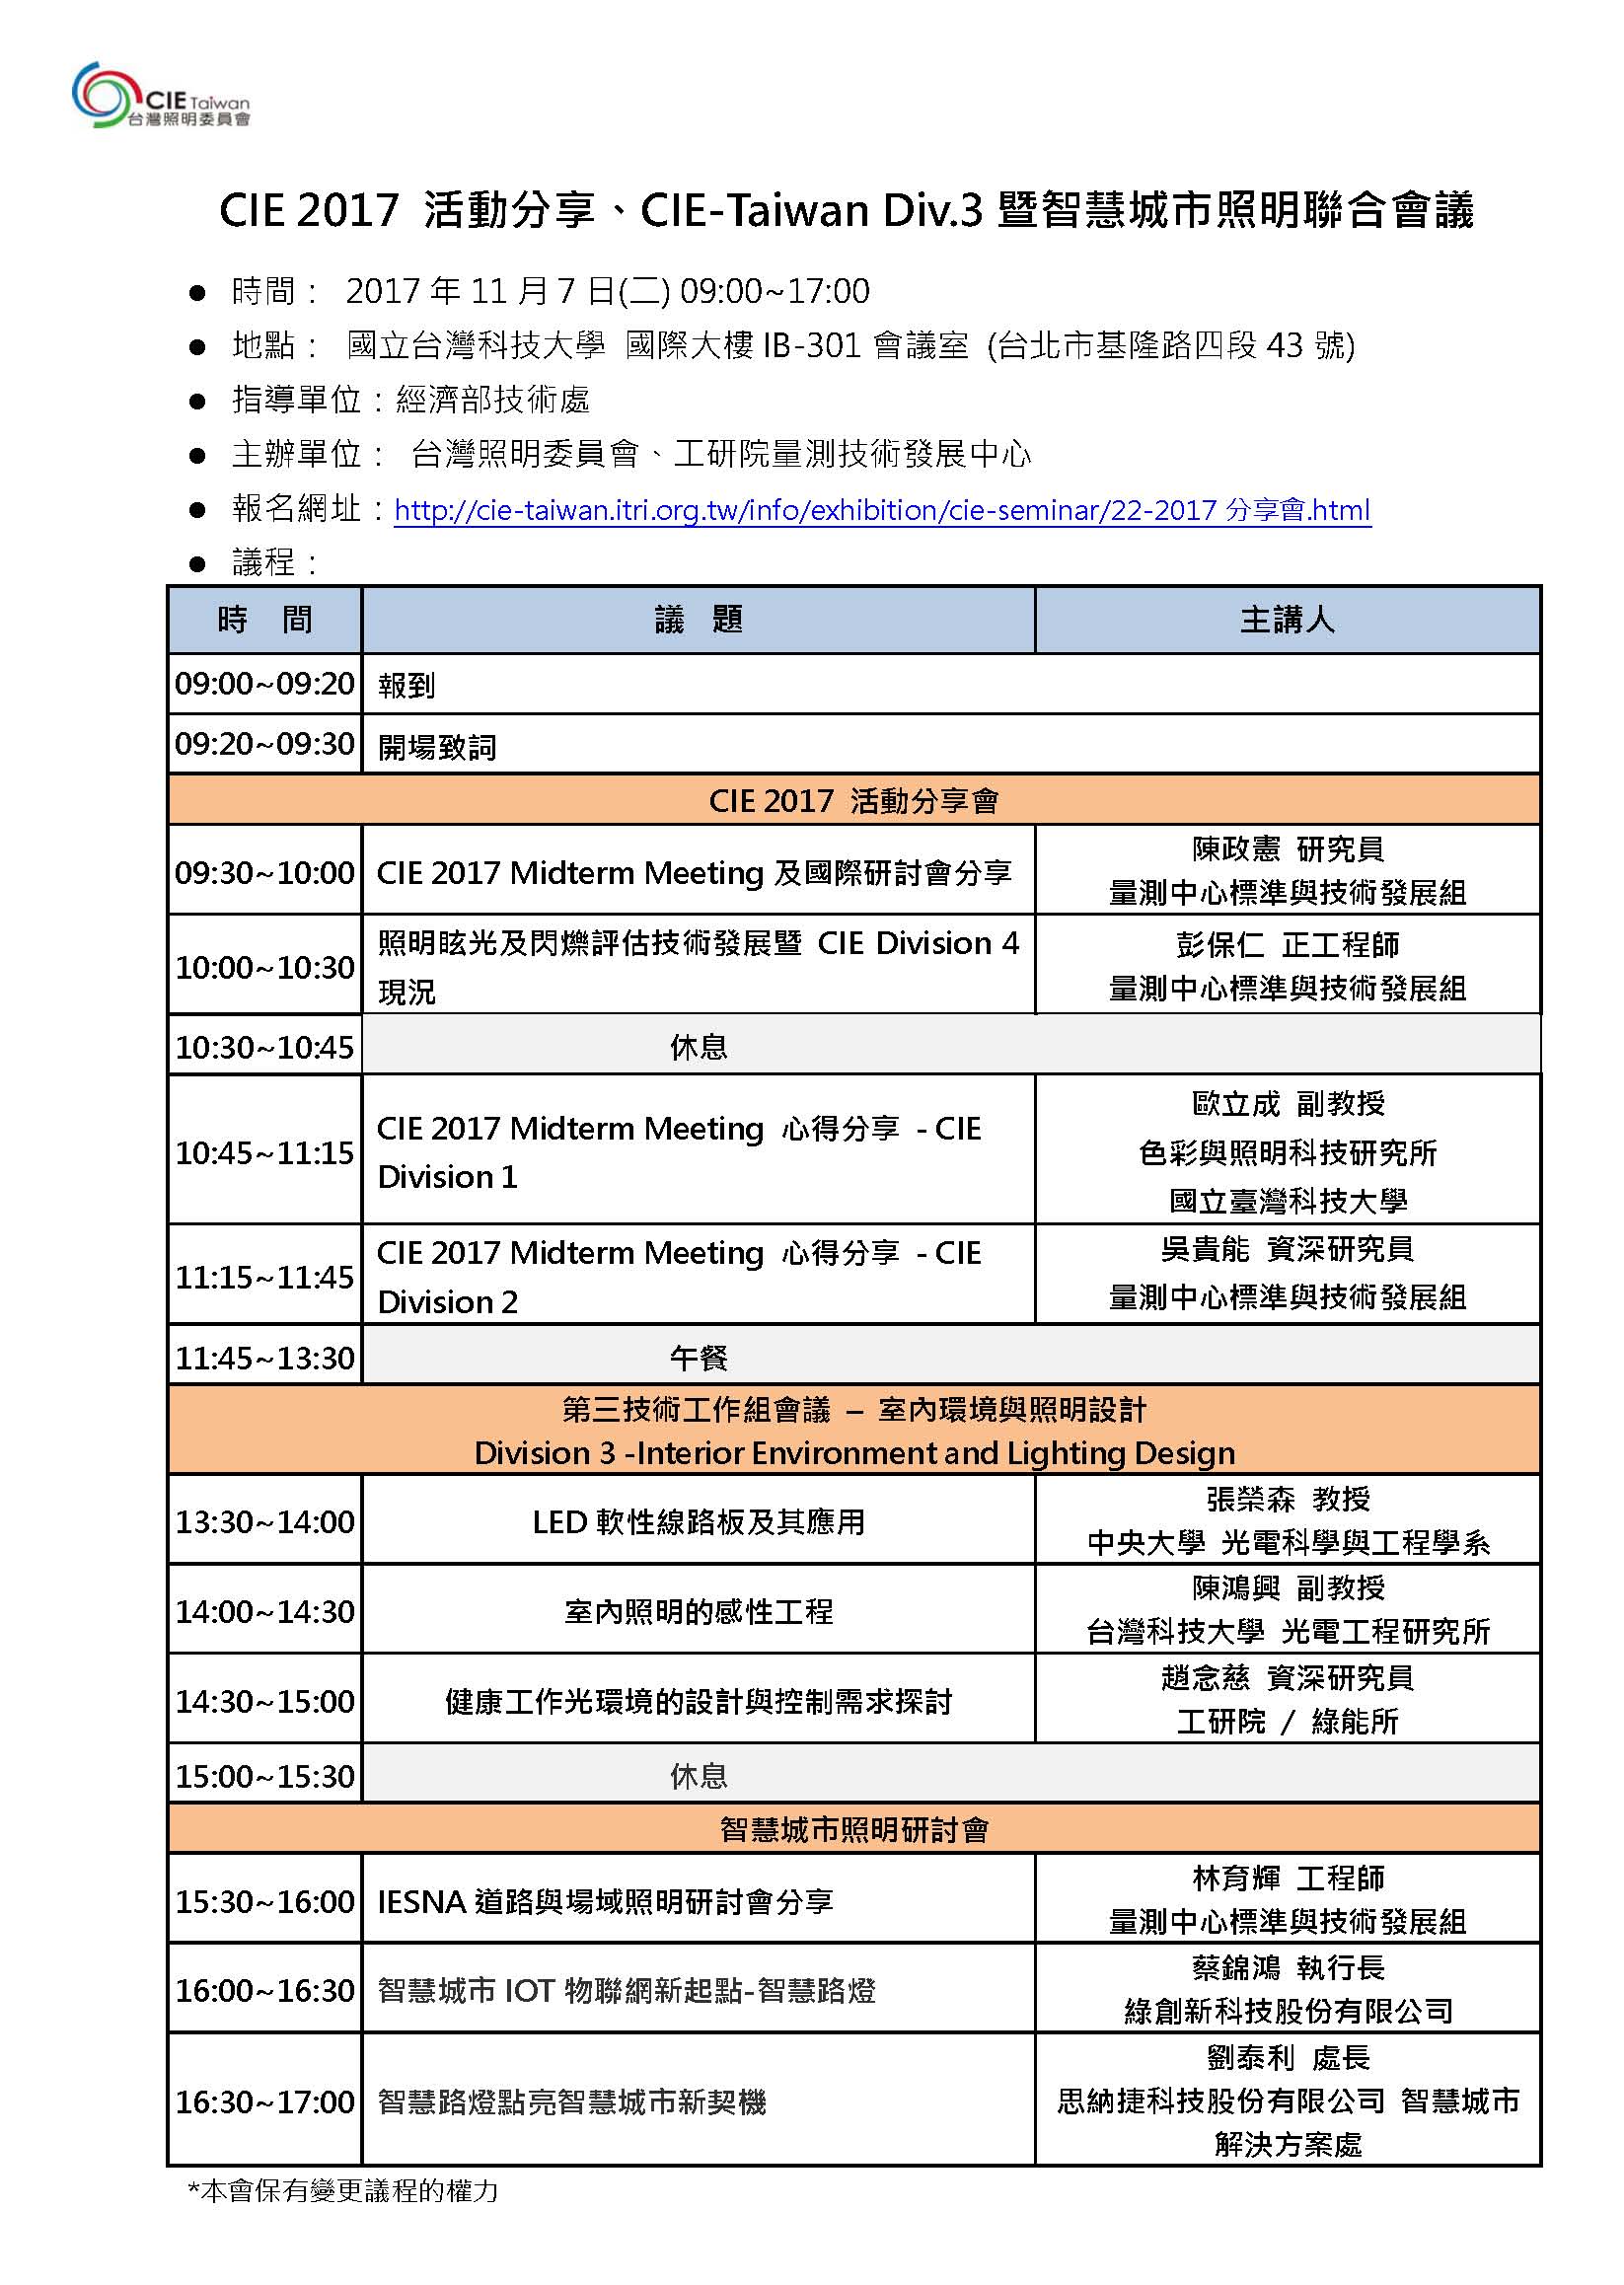 20171107 CIE Taiwan SharingandD3meeting agenda